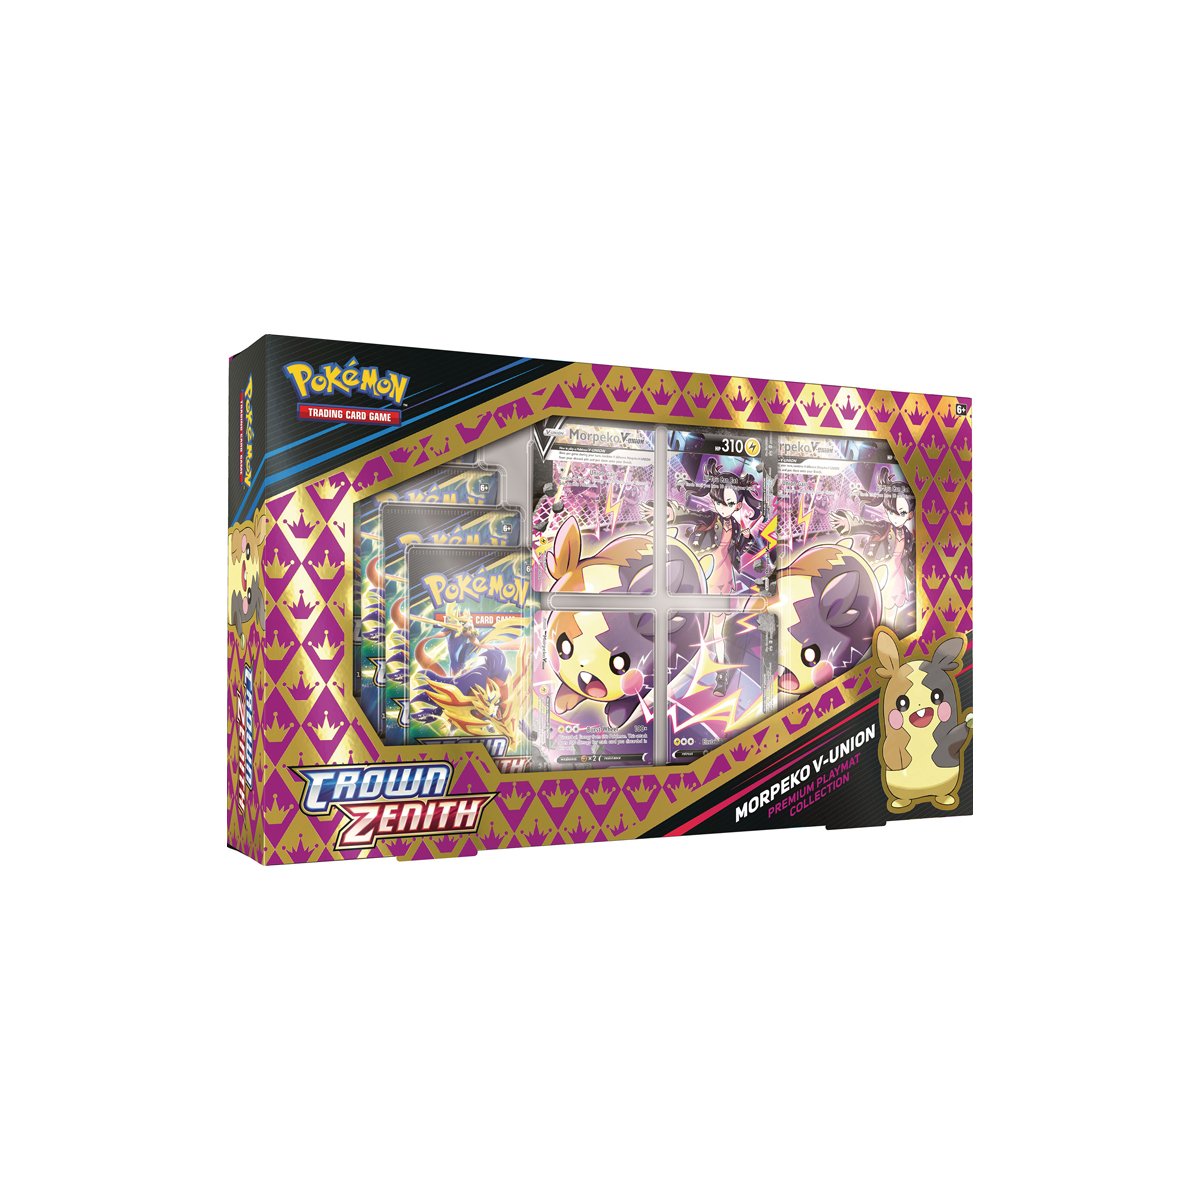 Pokemon Crown Zenith: Morpeko-V UNION Premium Playmat Collection (englisch)